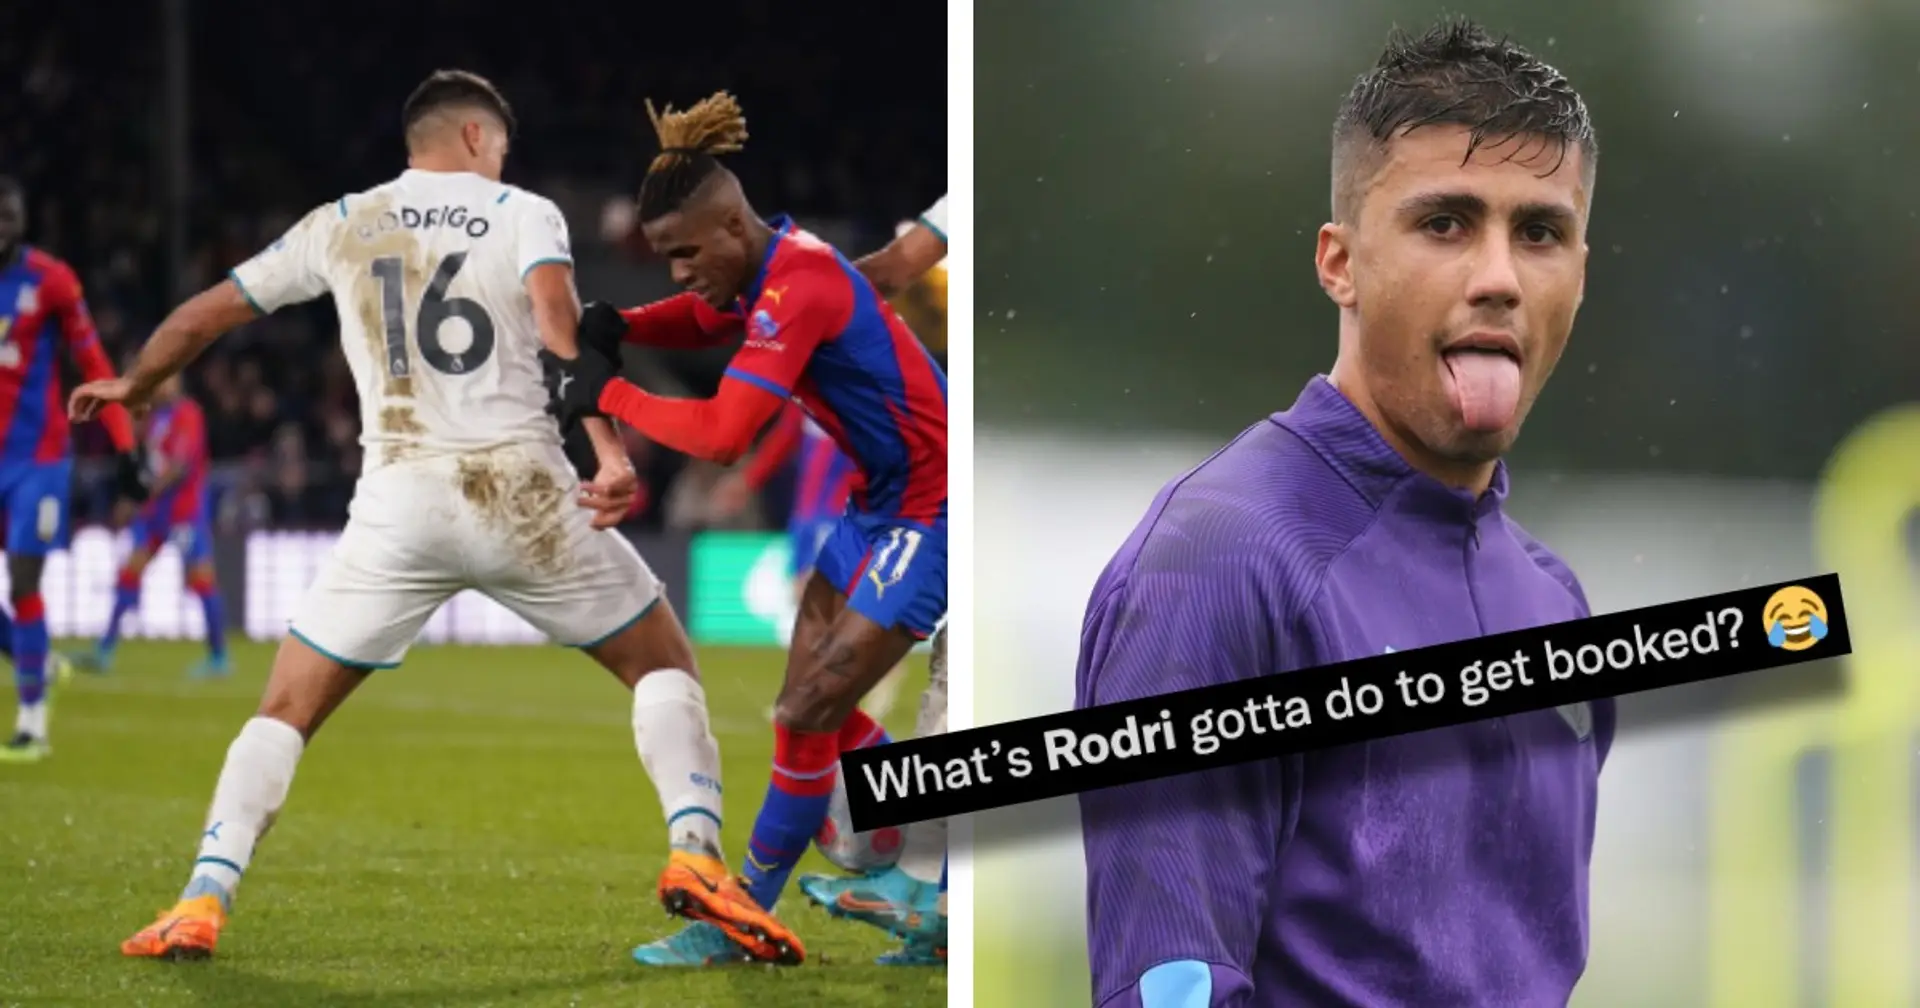 'That Rodri is a joke': Fans left baffled by how City midfielder gets away with fouls